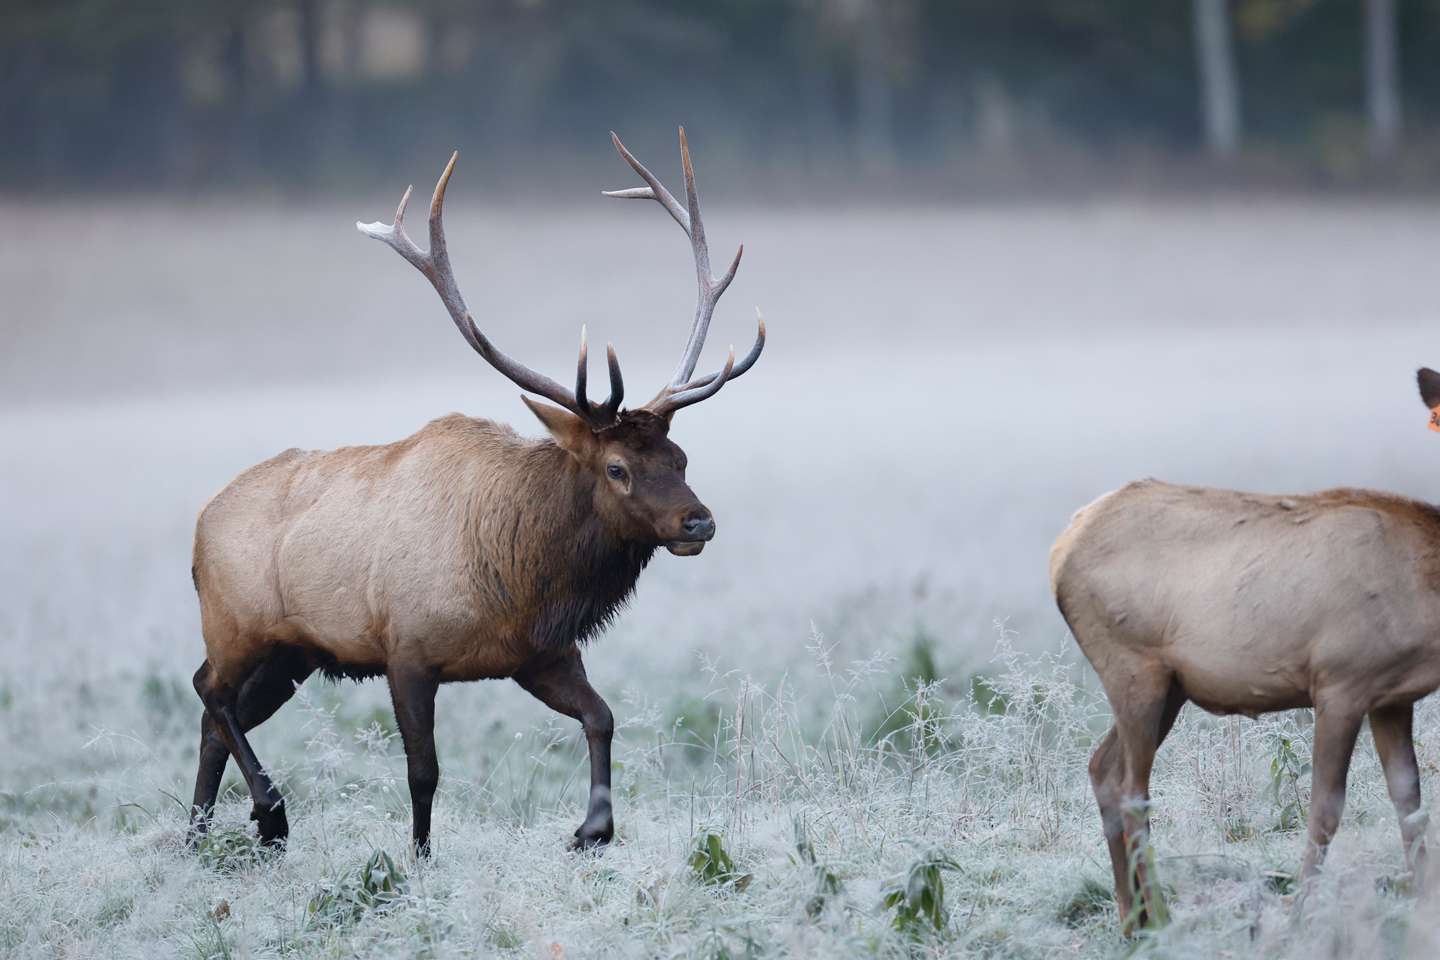 Bull elk kills cow in Smoky Mountains